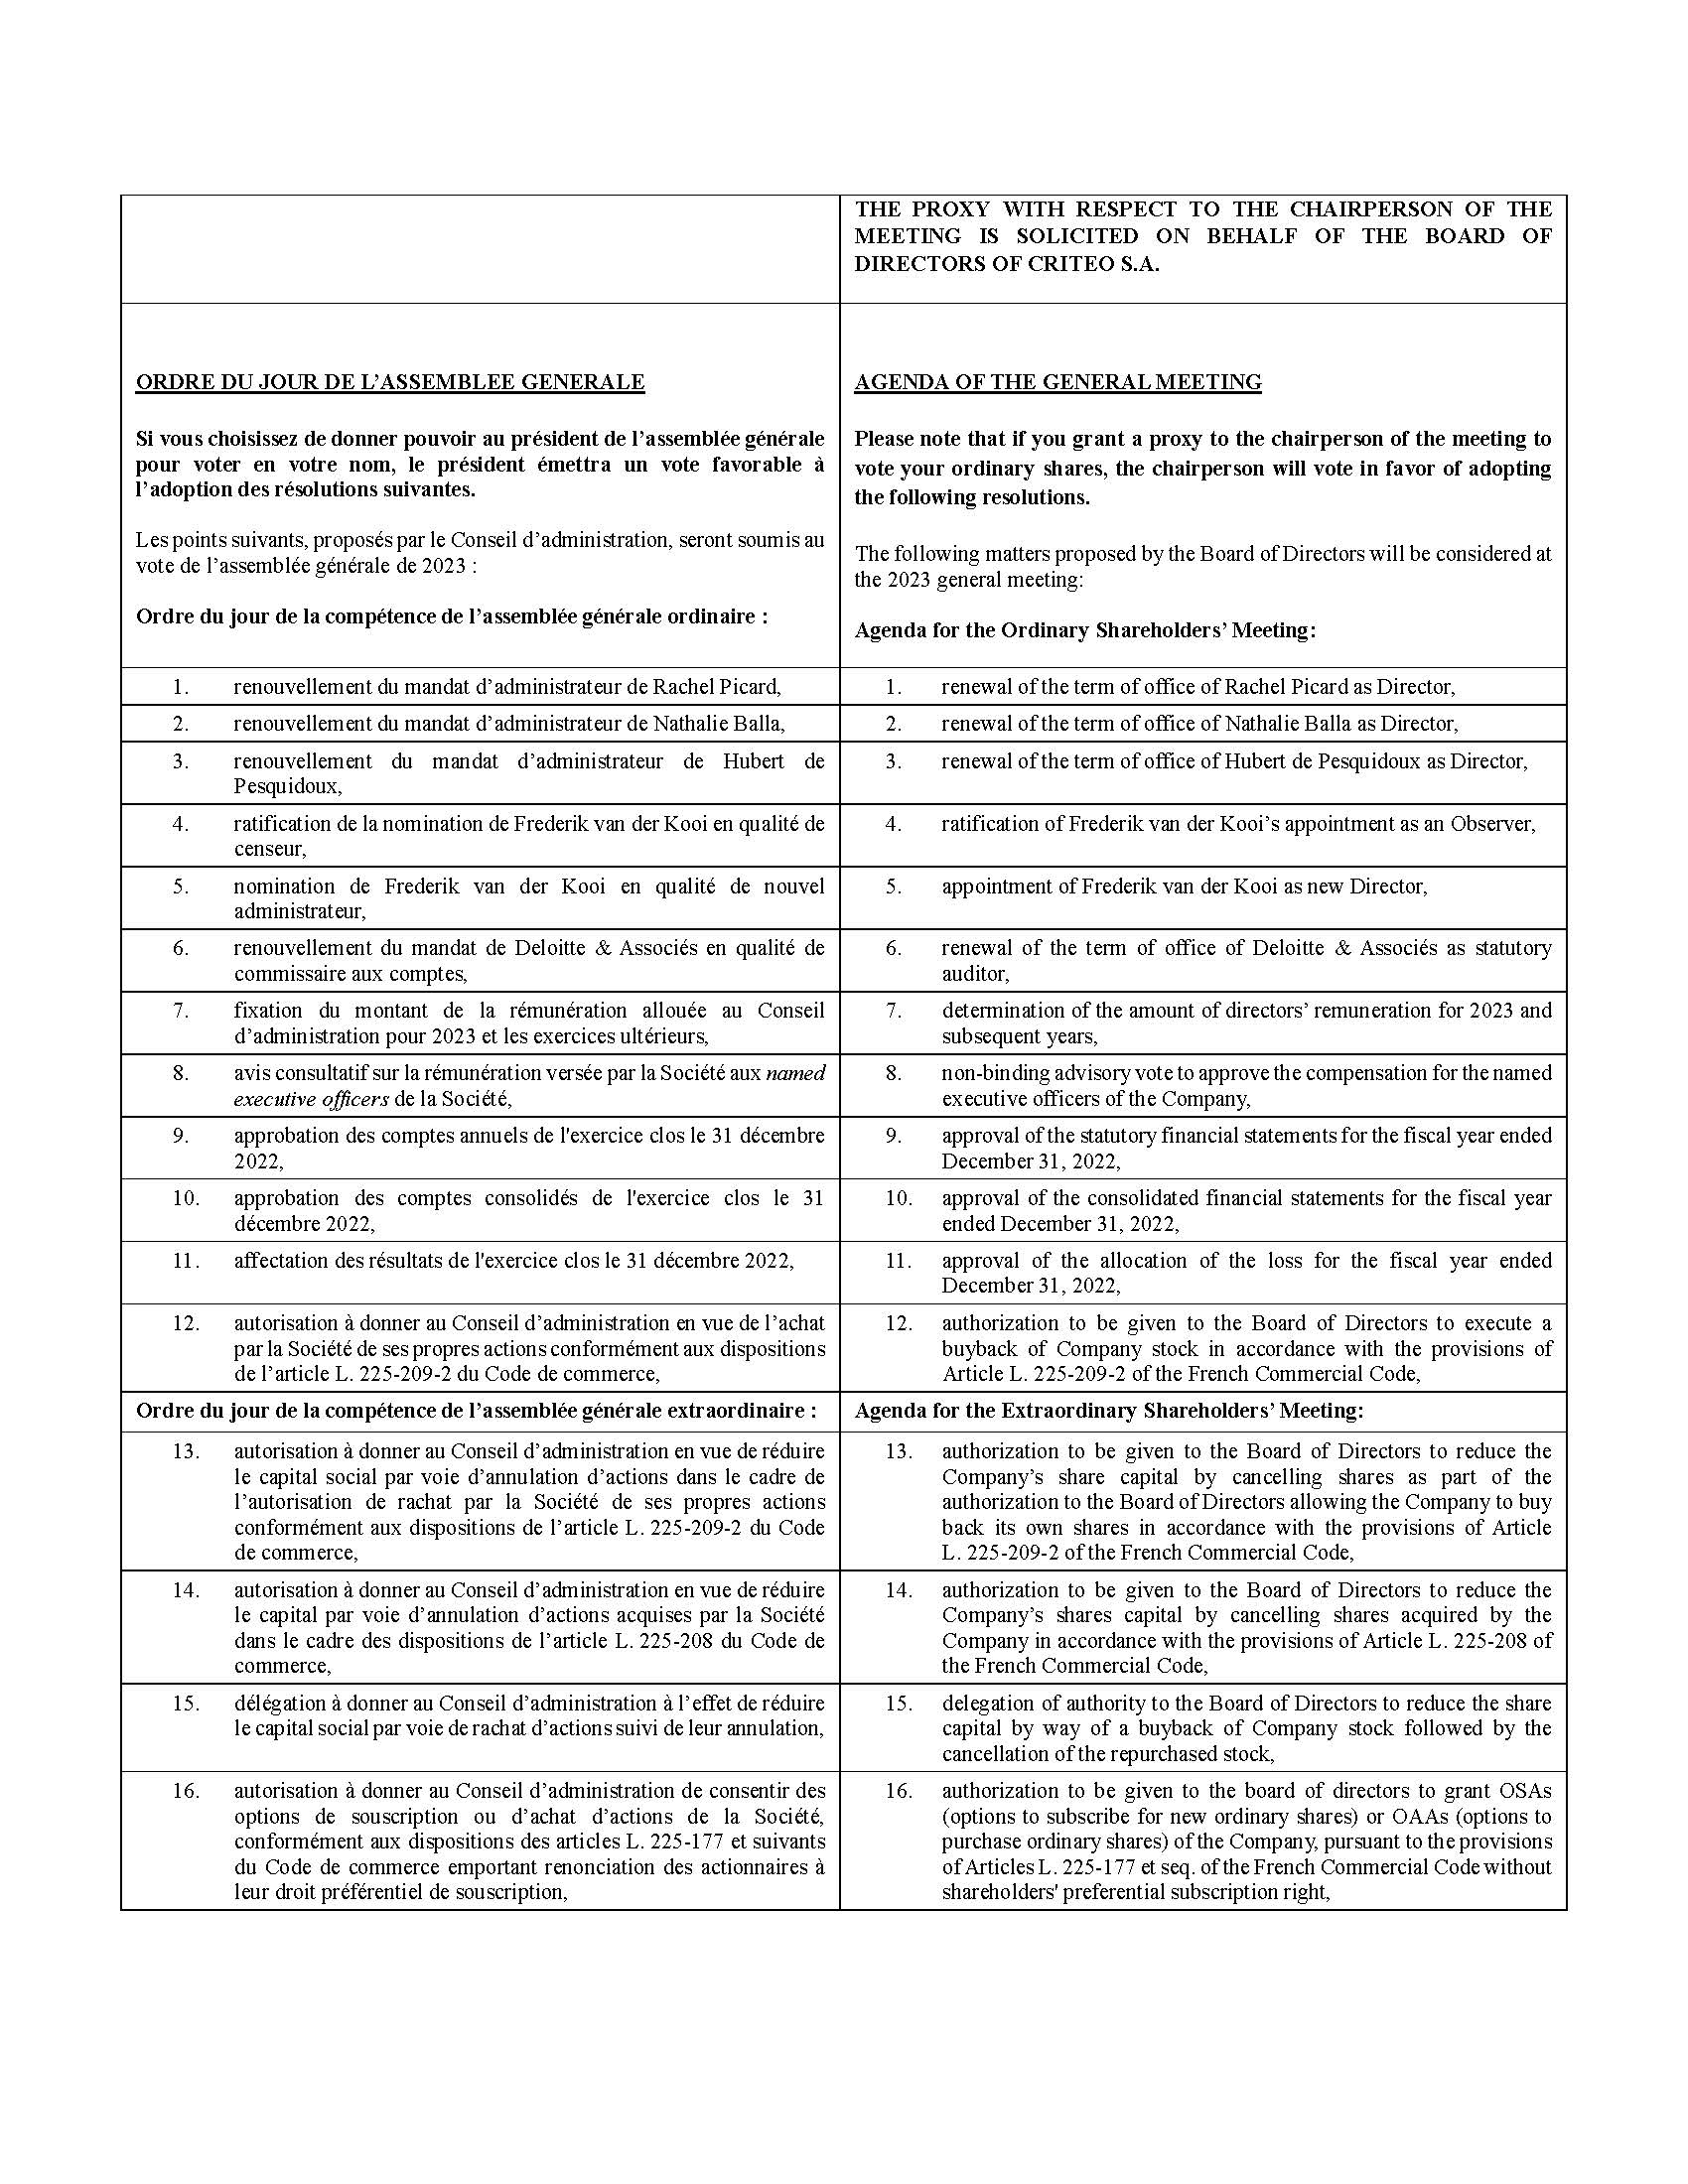 Criteo - 2023 AGM Agenda (Reformatted)_Page_1.jpg